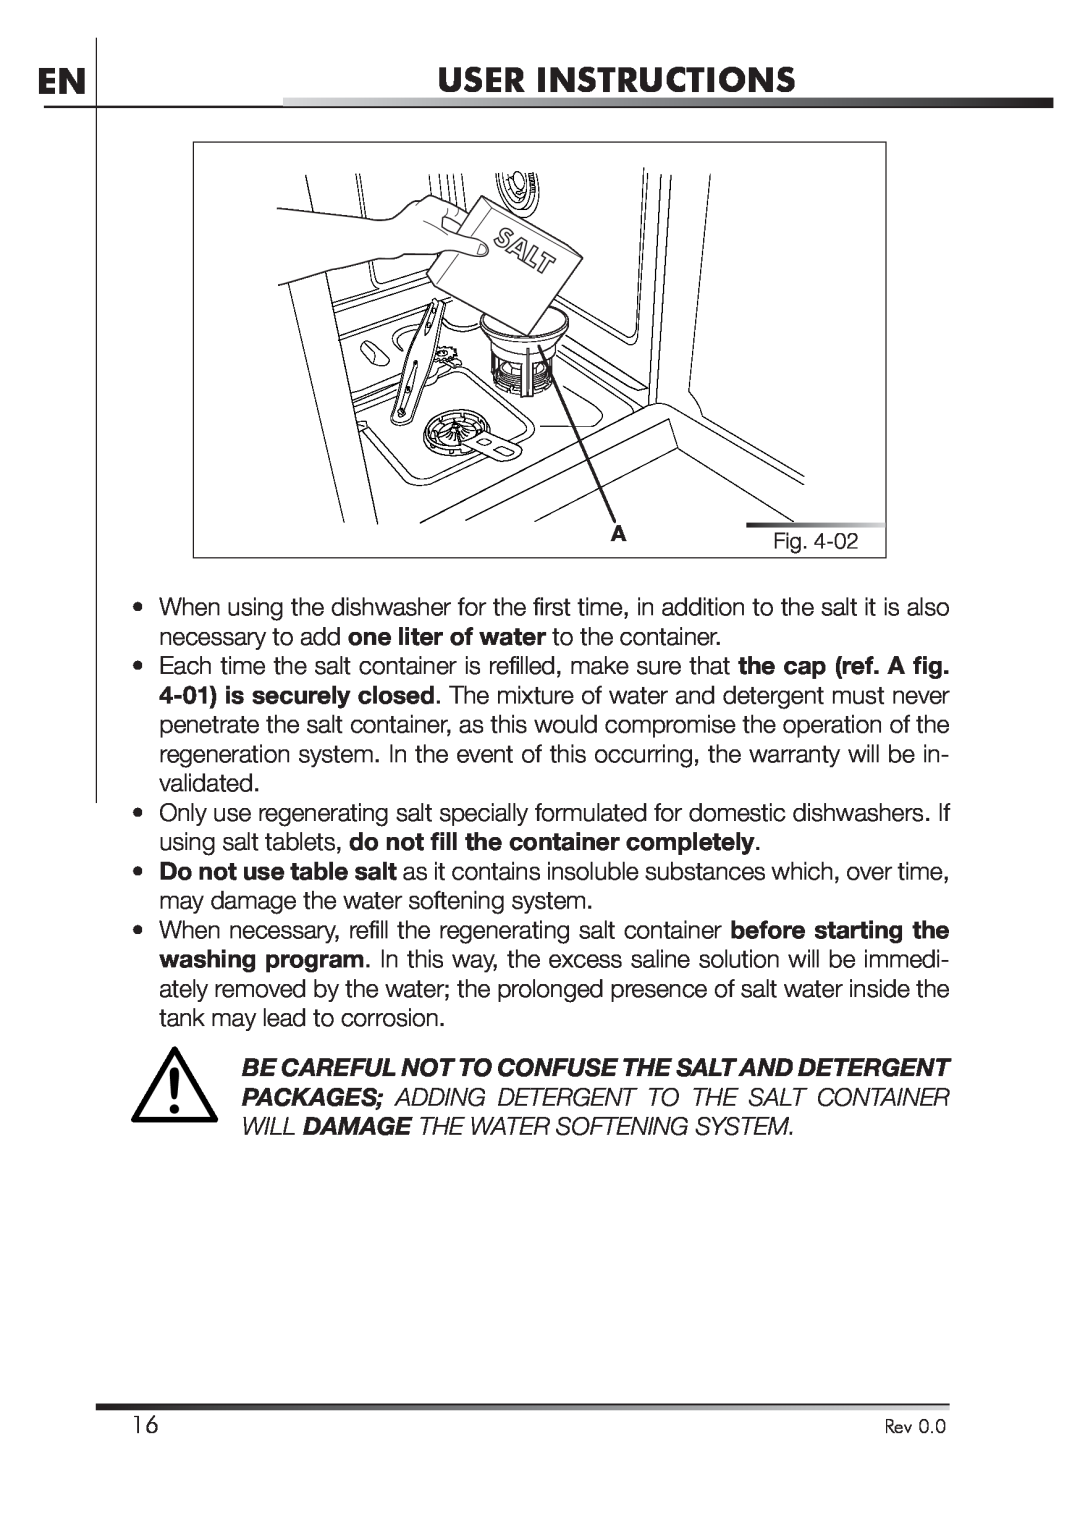 Smeg STA4645 instruction manual User Instructions 